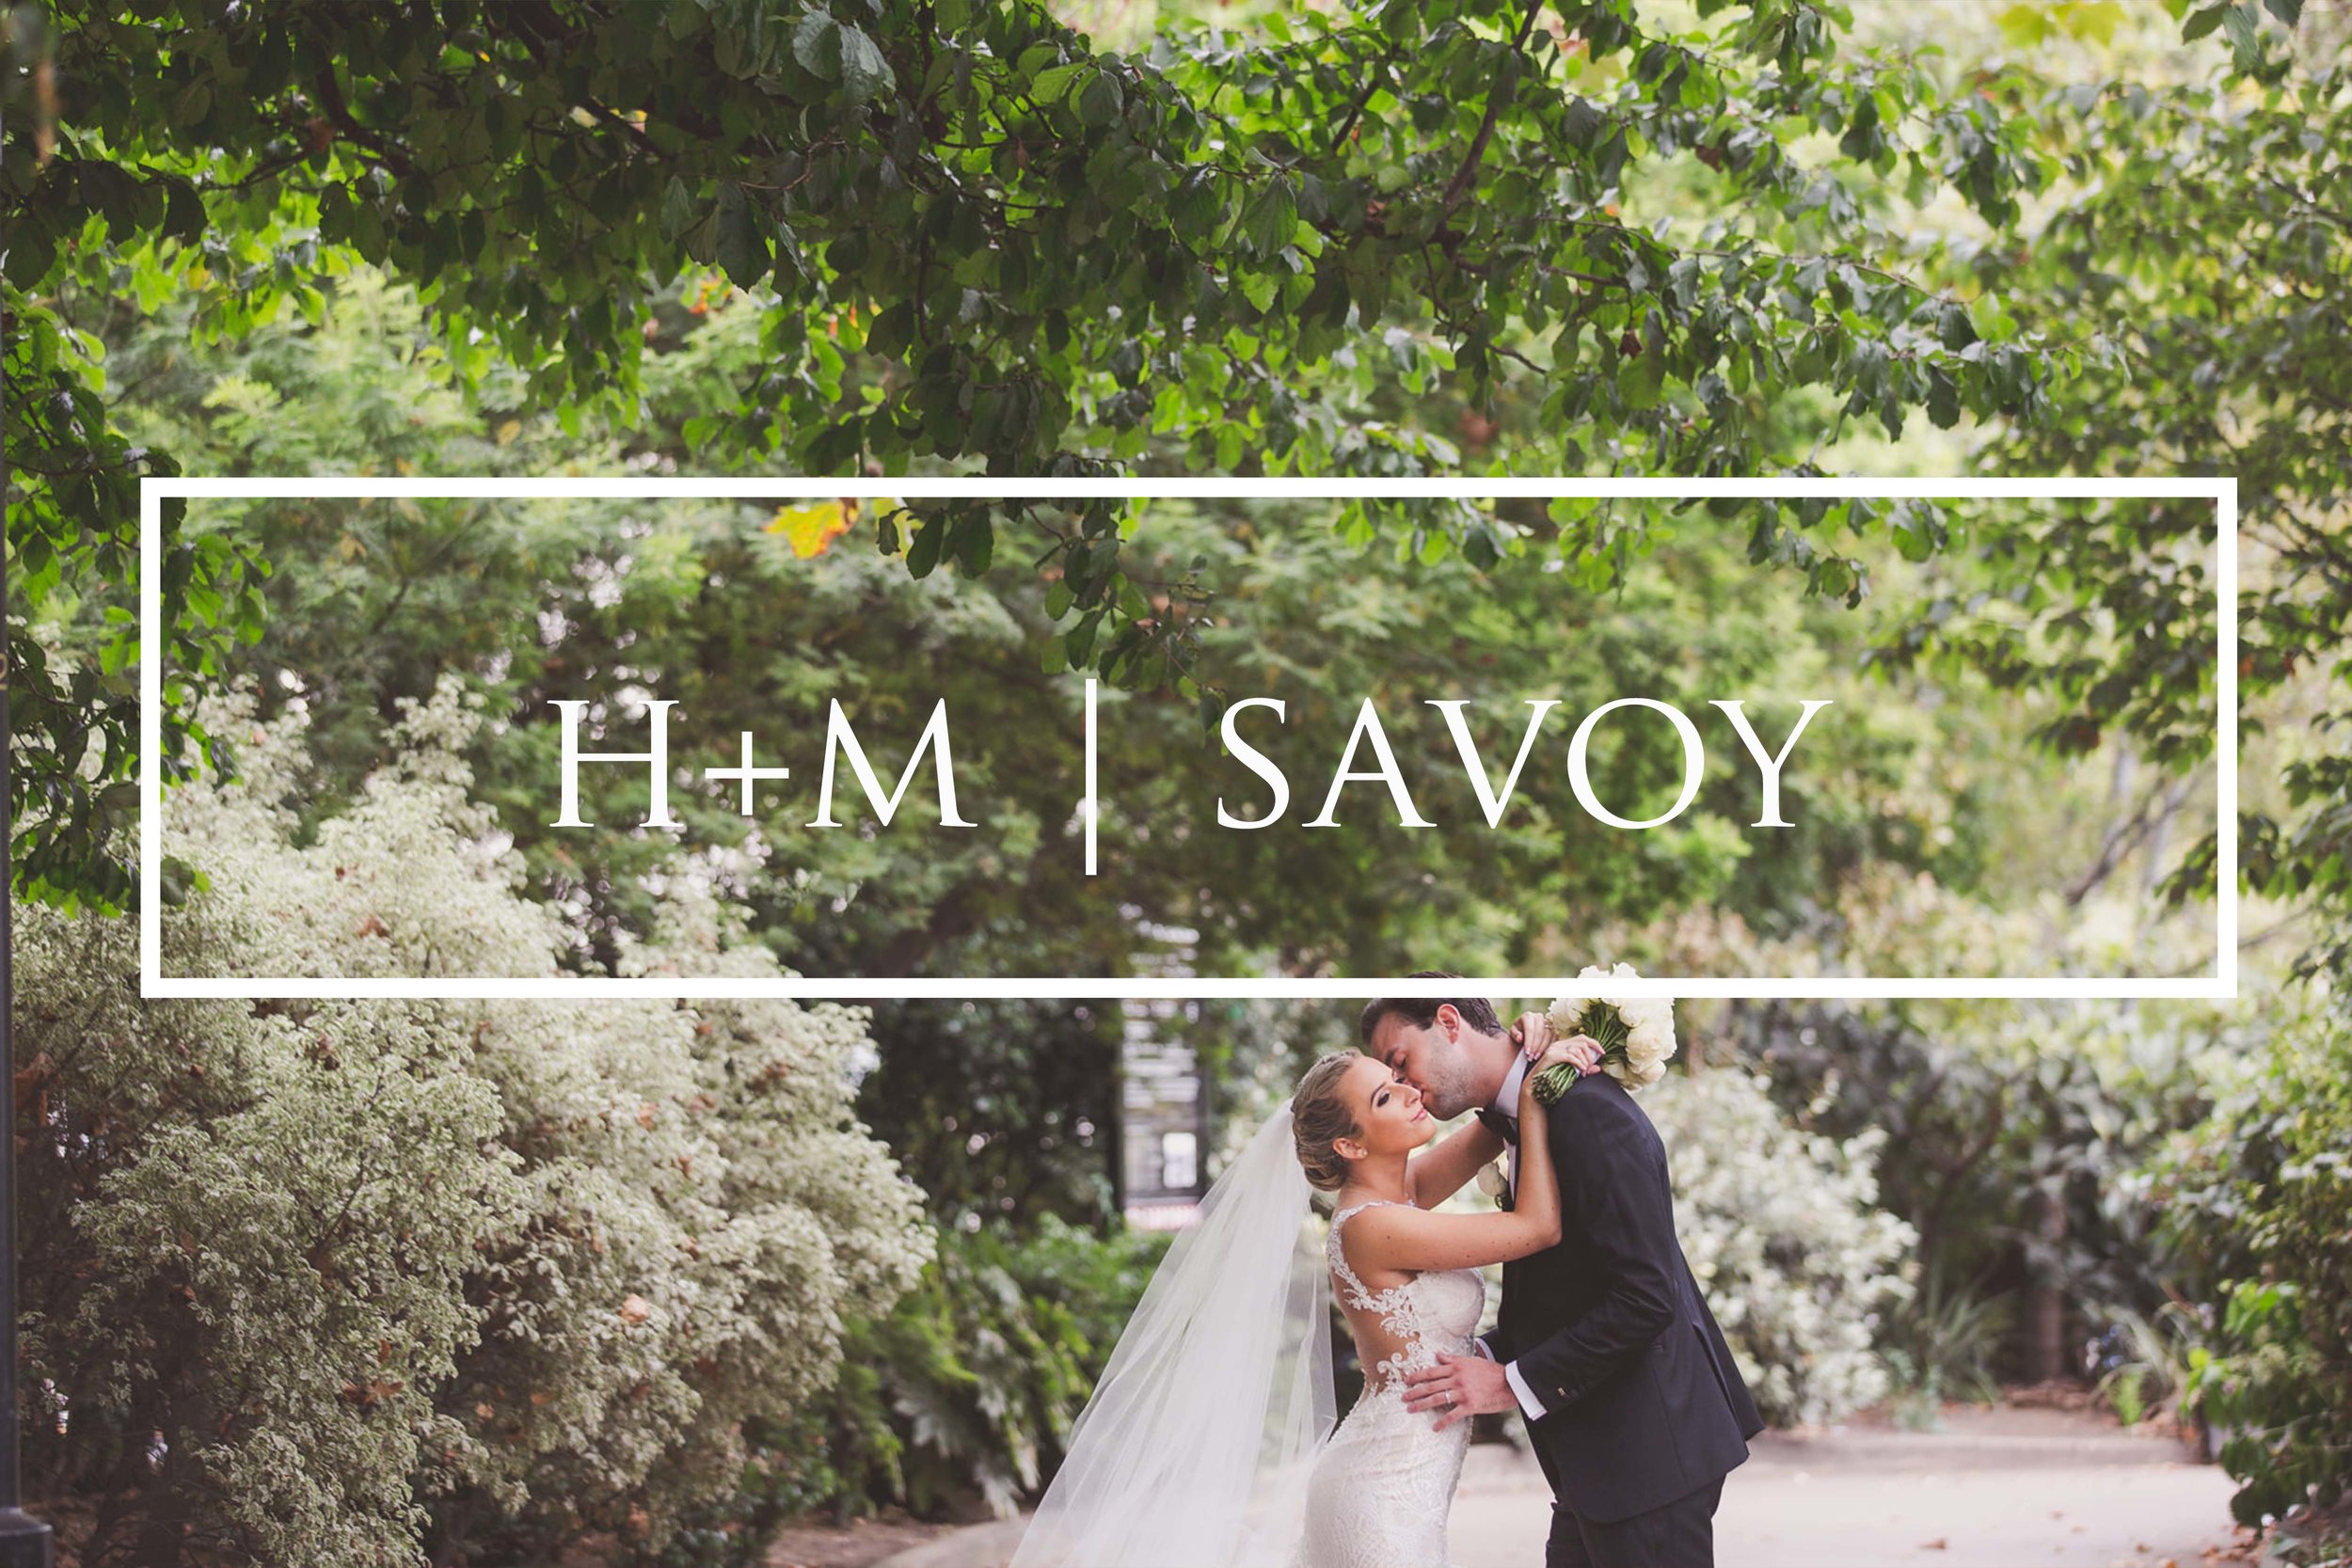 Wedding at Savoy London